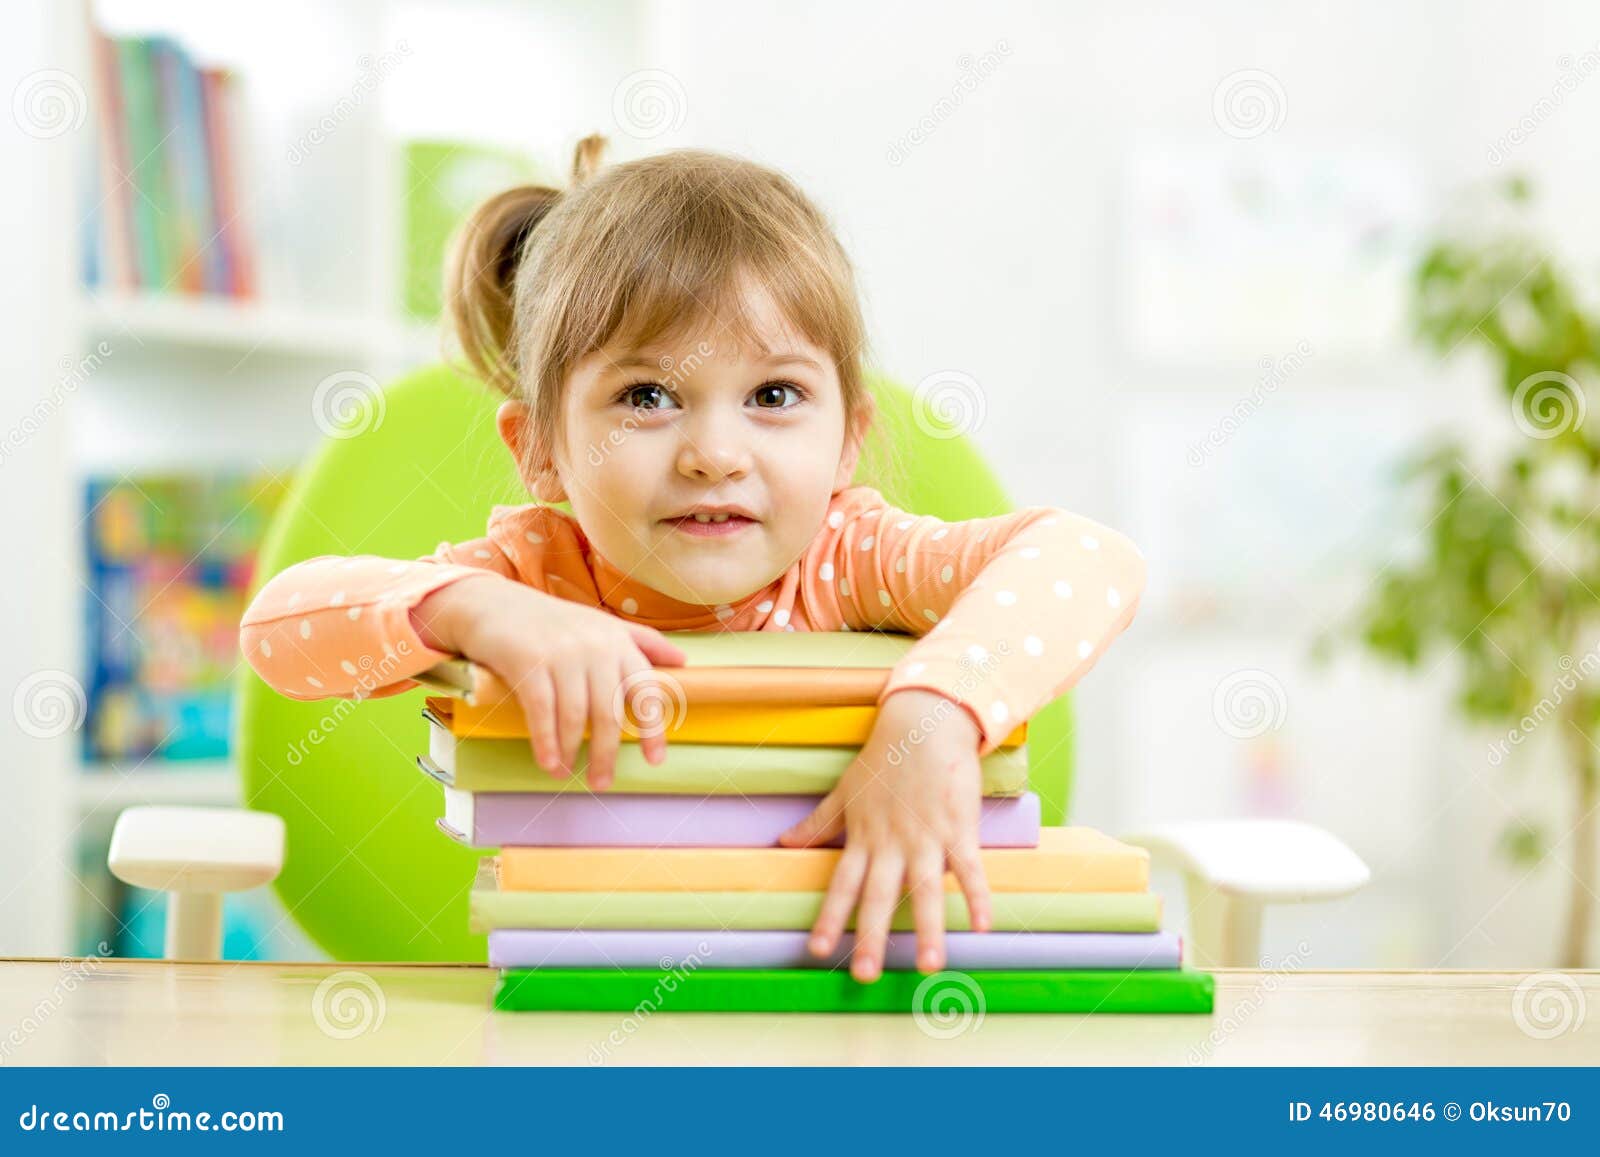 cute child girl preschooler with books